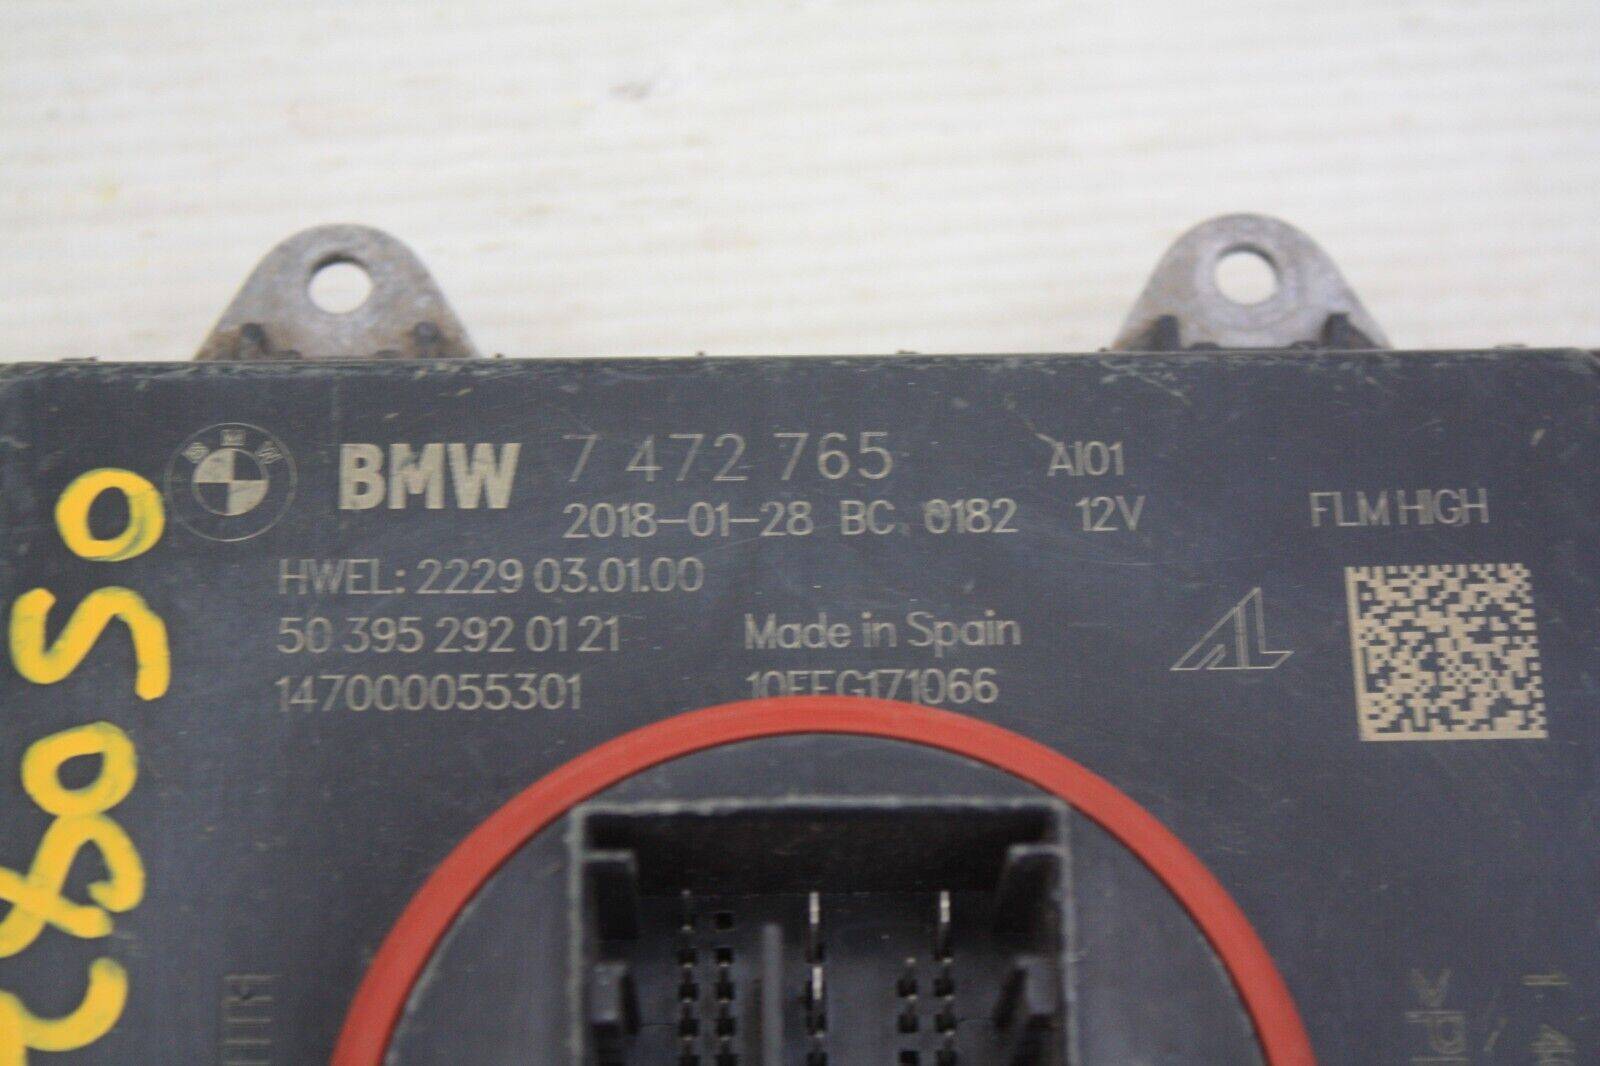 BMW-5-6-7-Series-G30-F90-G31-G32-G11-LED-Headlight-Control-Unit-Module-7472765-175849010923-5